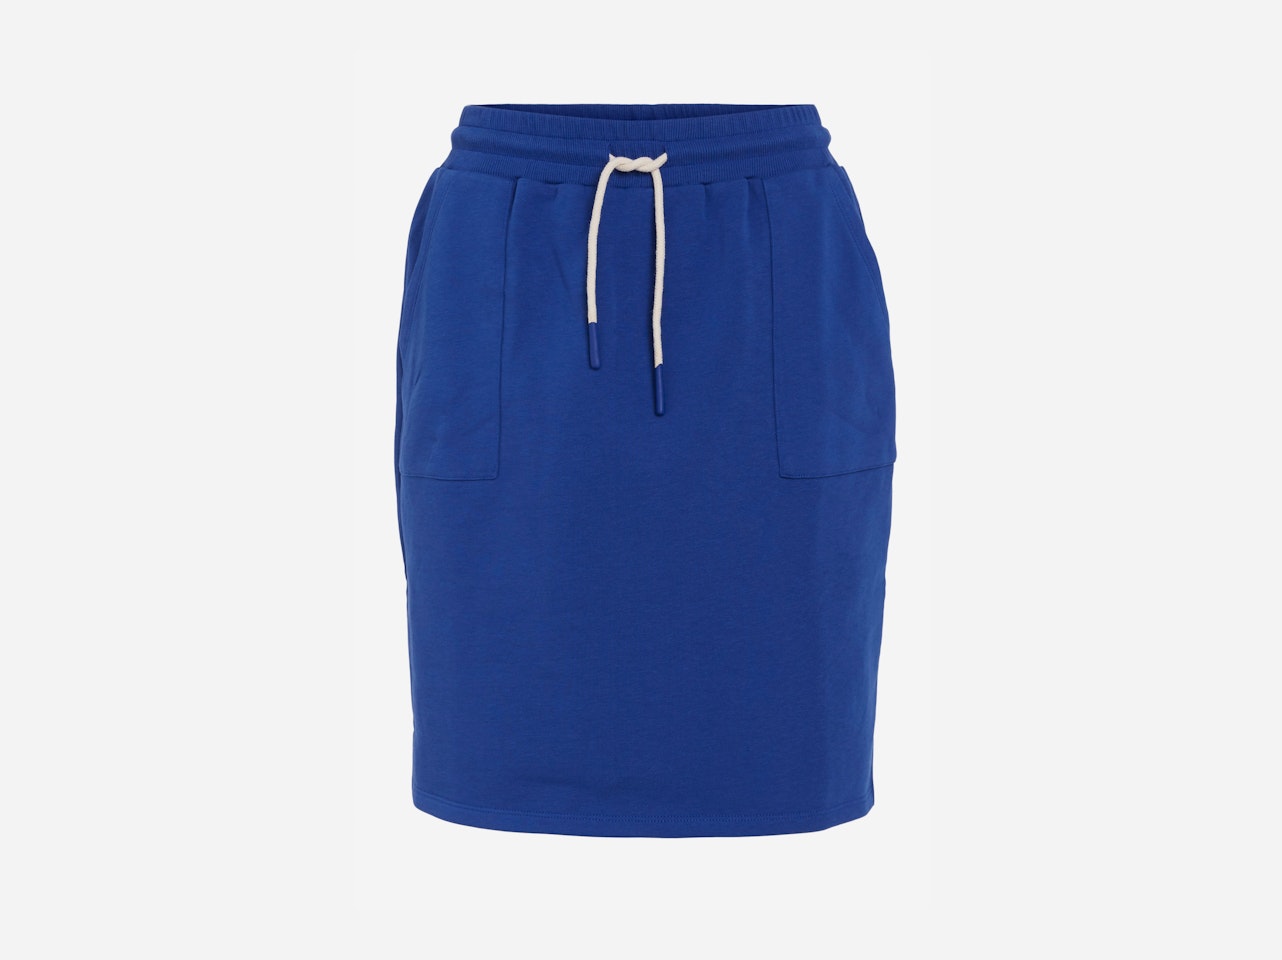 Sweat skirt at knee length